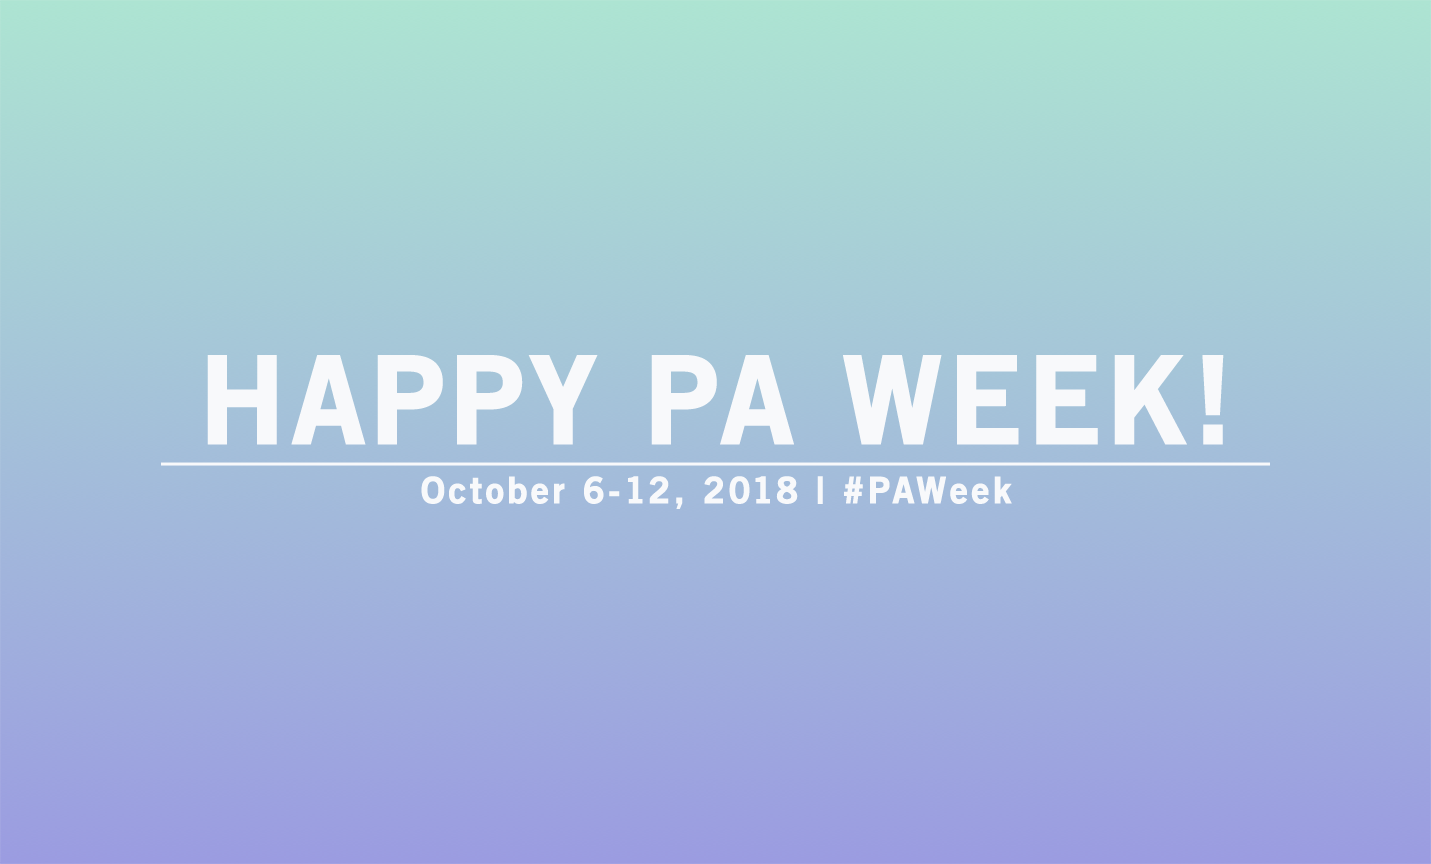 Three Ways to Celebrate PA Week